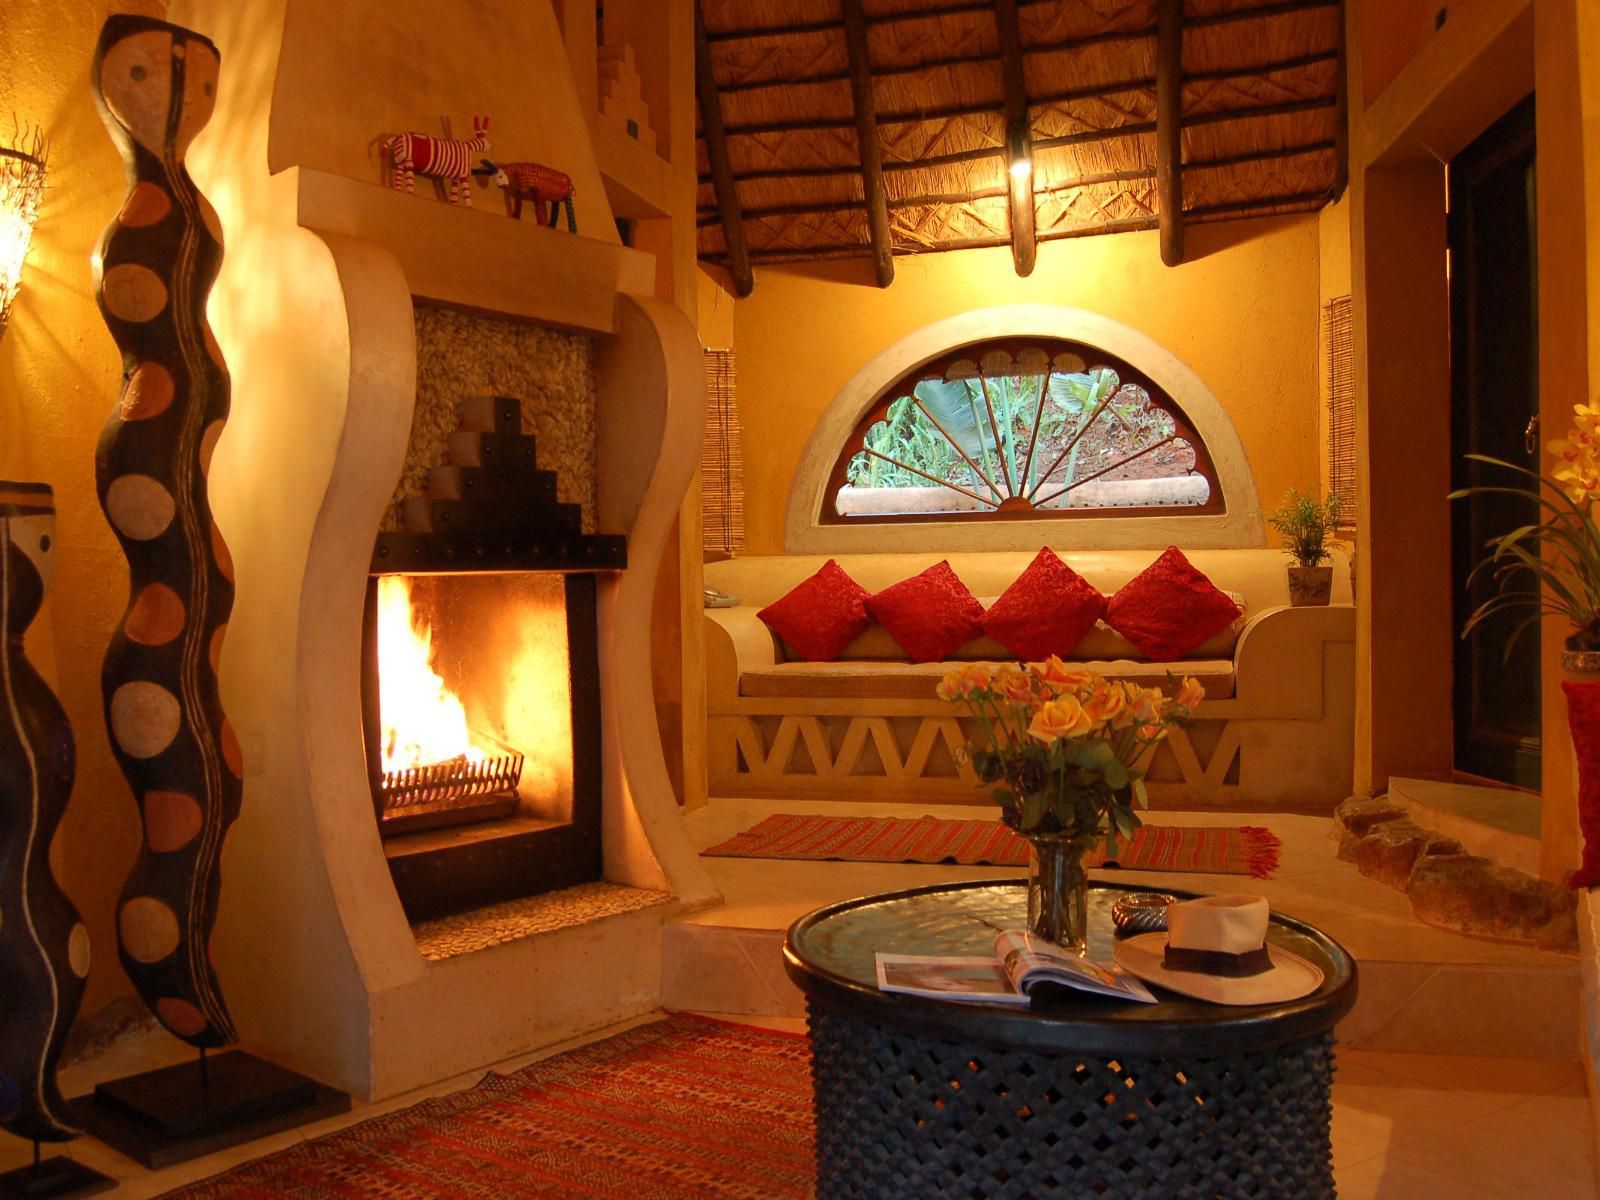 Timamoon Lodge Hazyview Mpumalanga South Africa Colorful, Fire, Nature, Fireplace